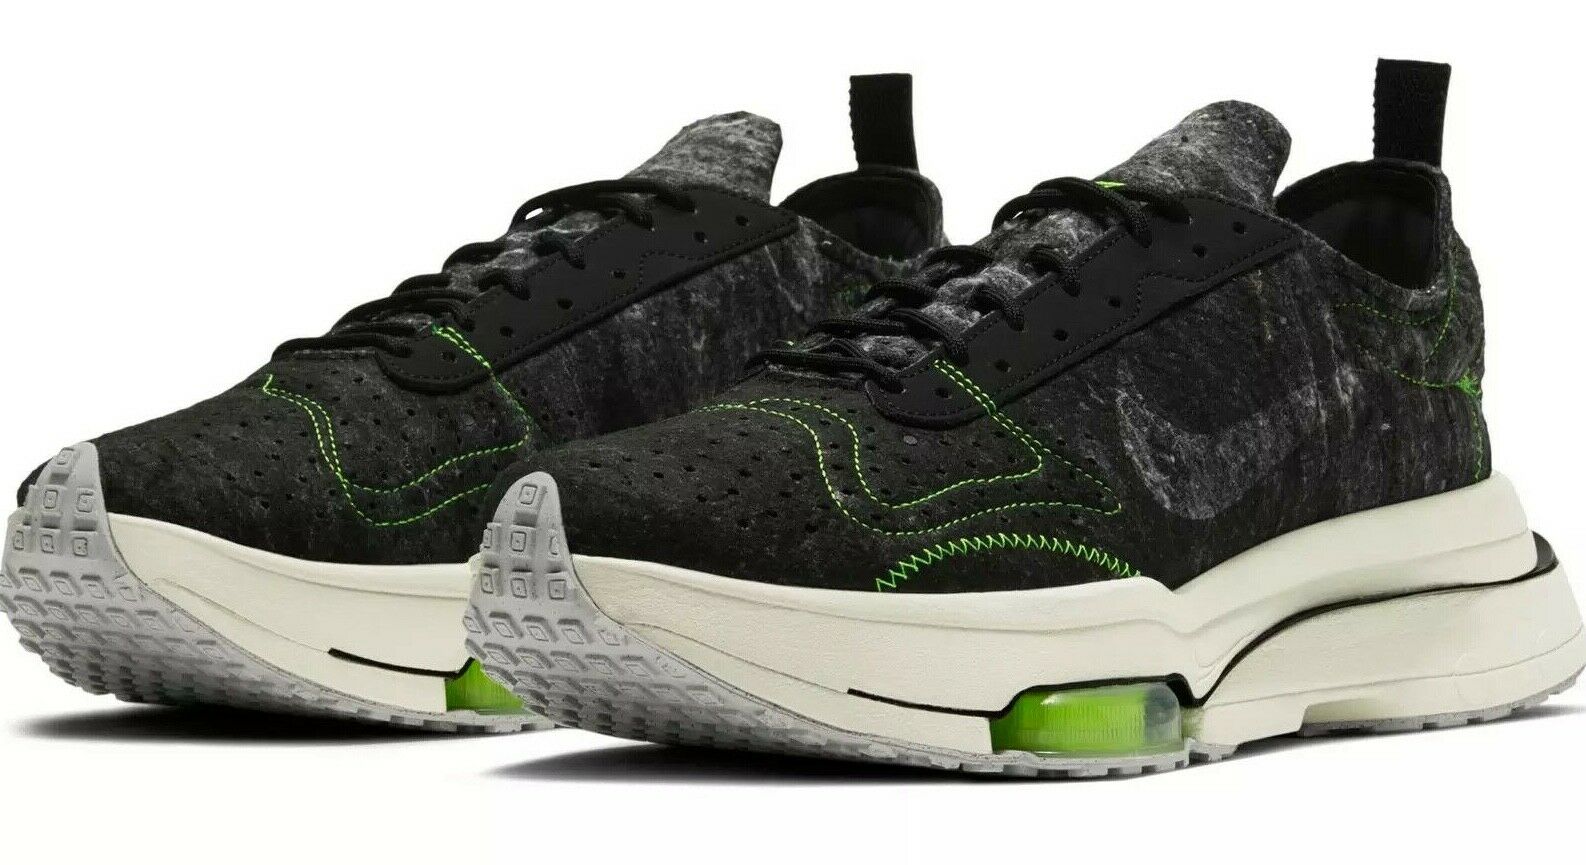 Nike (Air Zoom Type) Black Shoes Recycled (CW7157-001) Mens Size 13 NIB $160 ⭐️